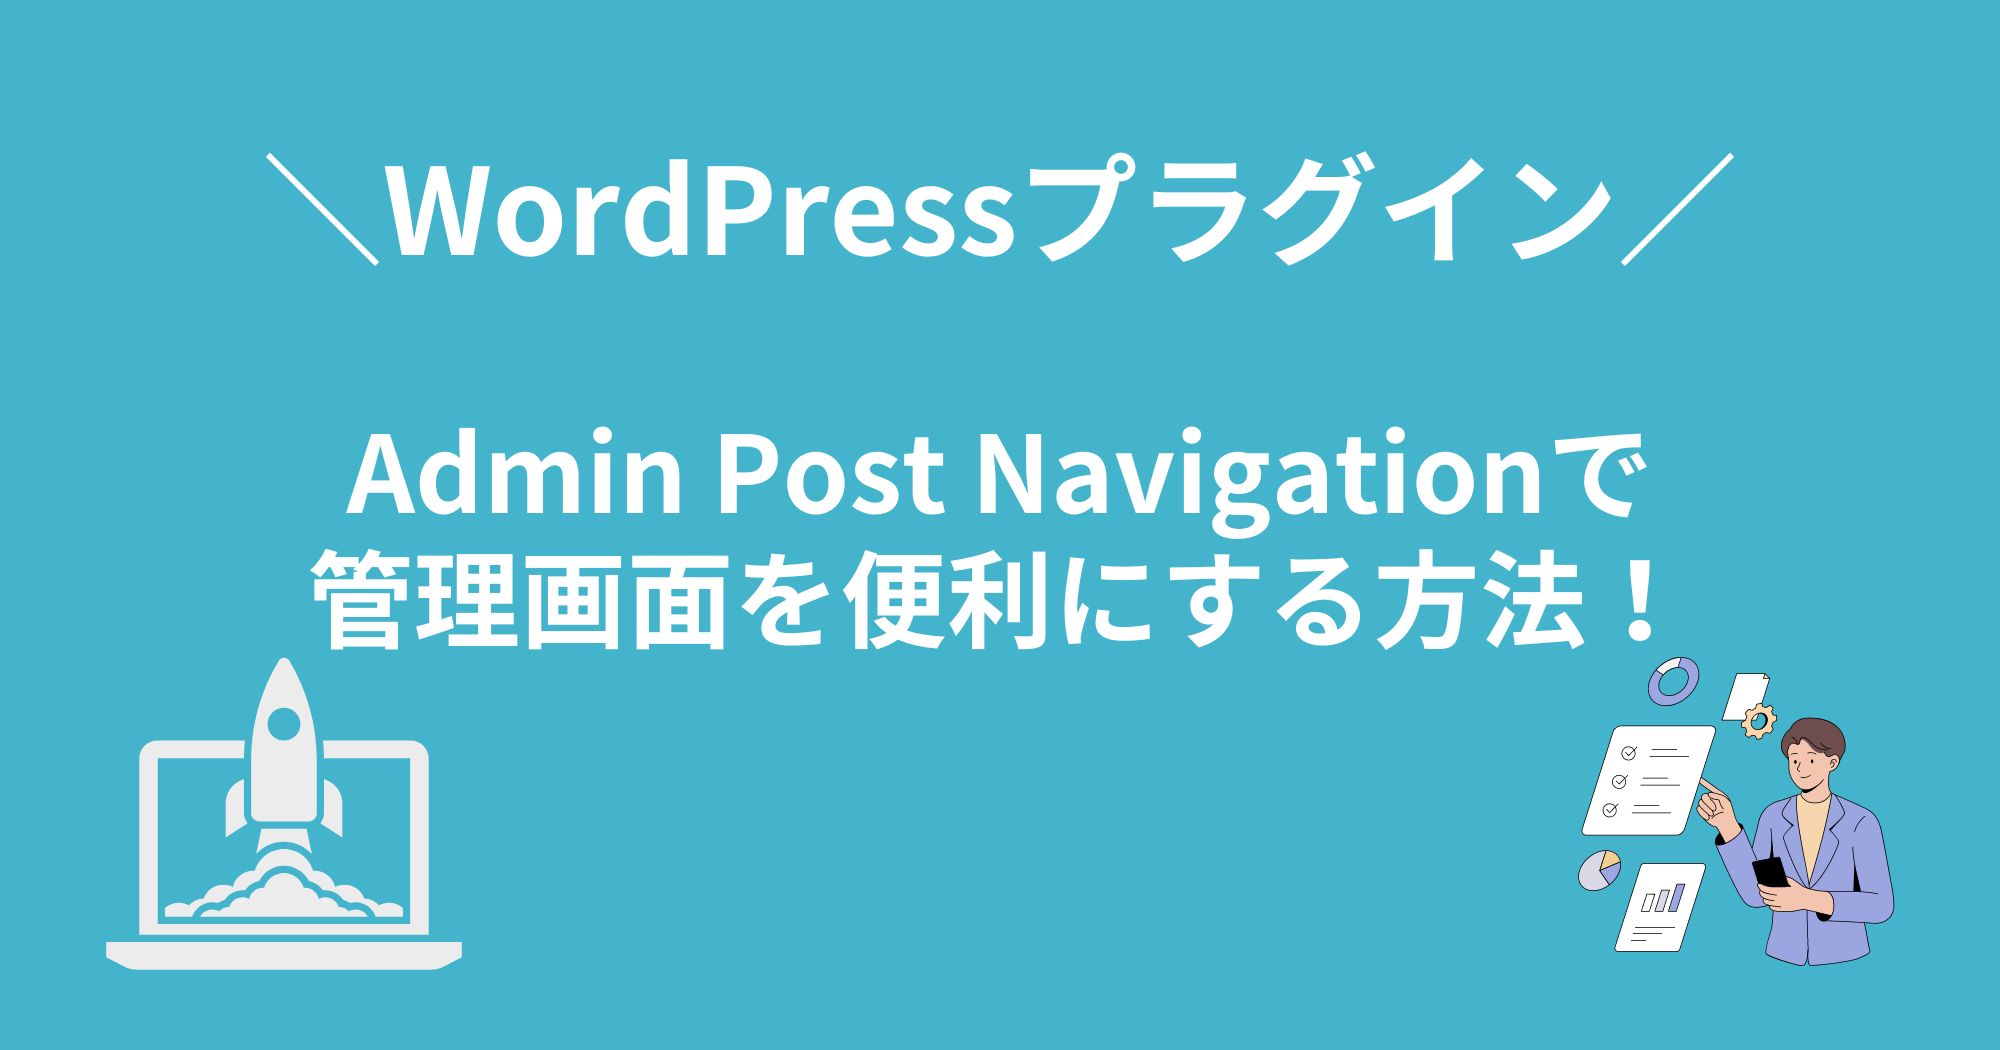 WordPressプラグイン「Admin Post Navigation」で記事投稿画面を少し便利に改良！